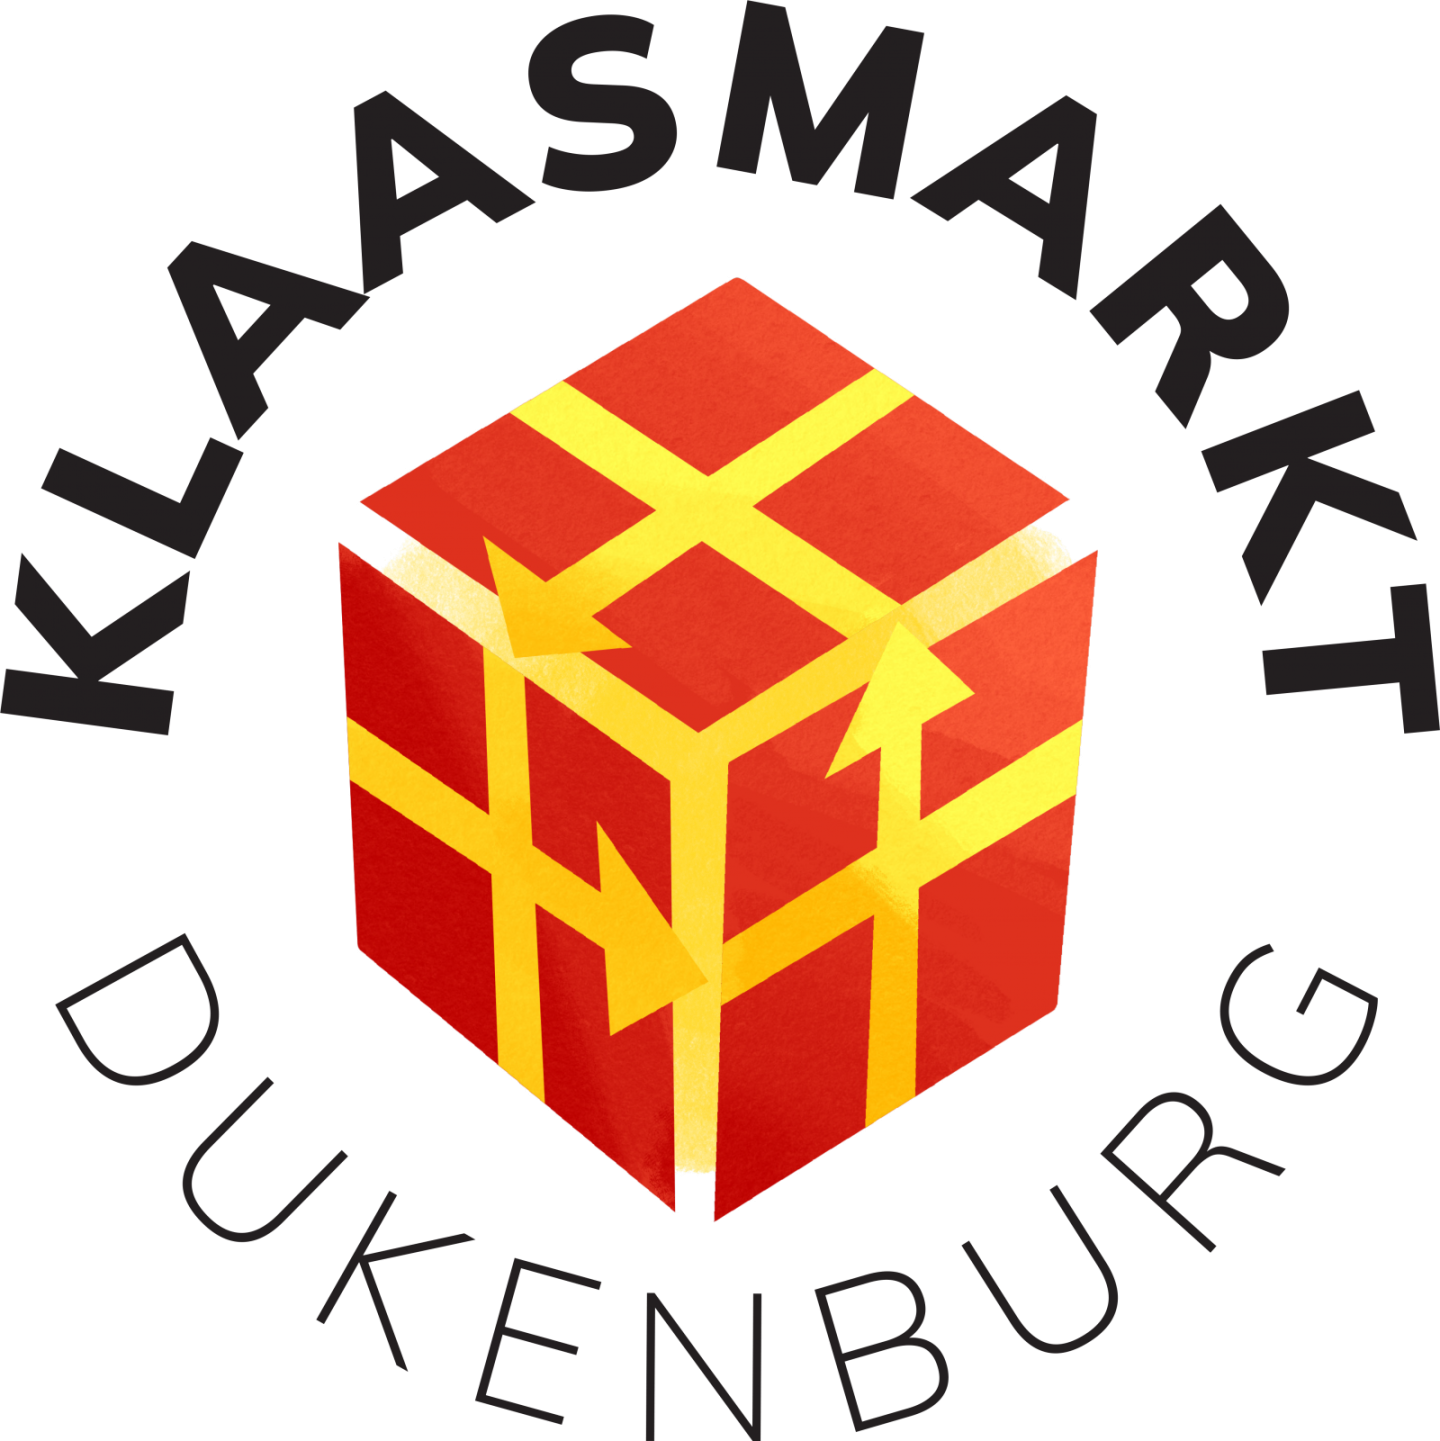 Klaasmarkt Dukenburg